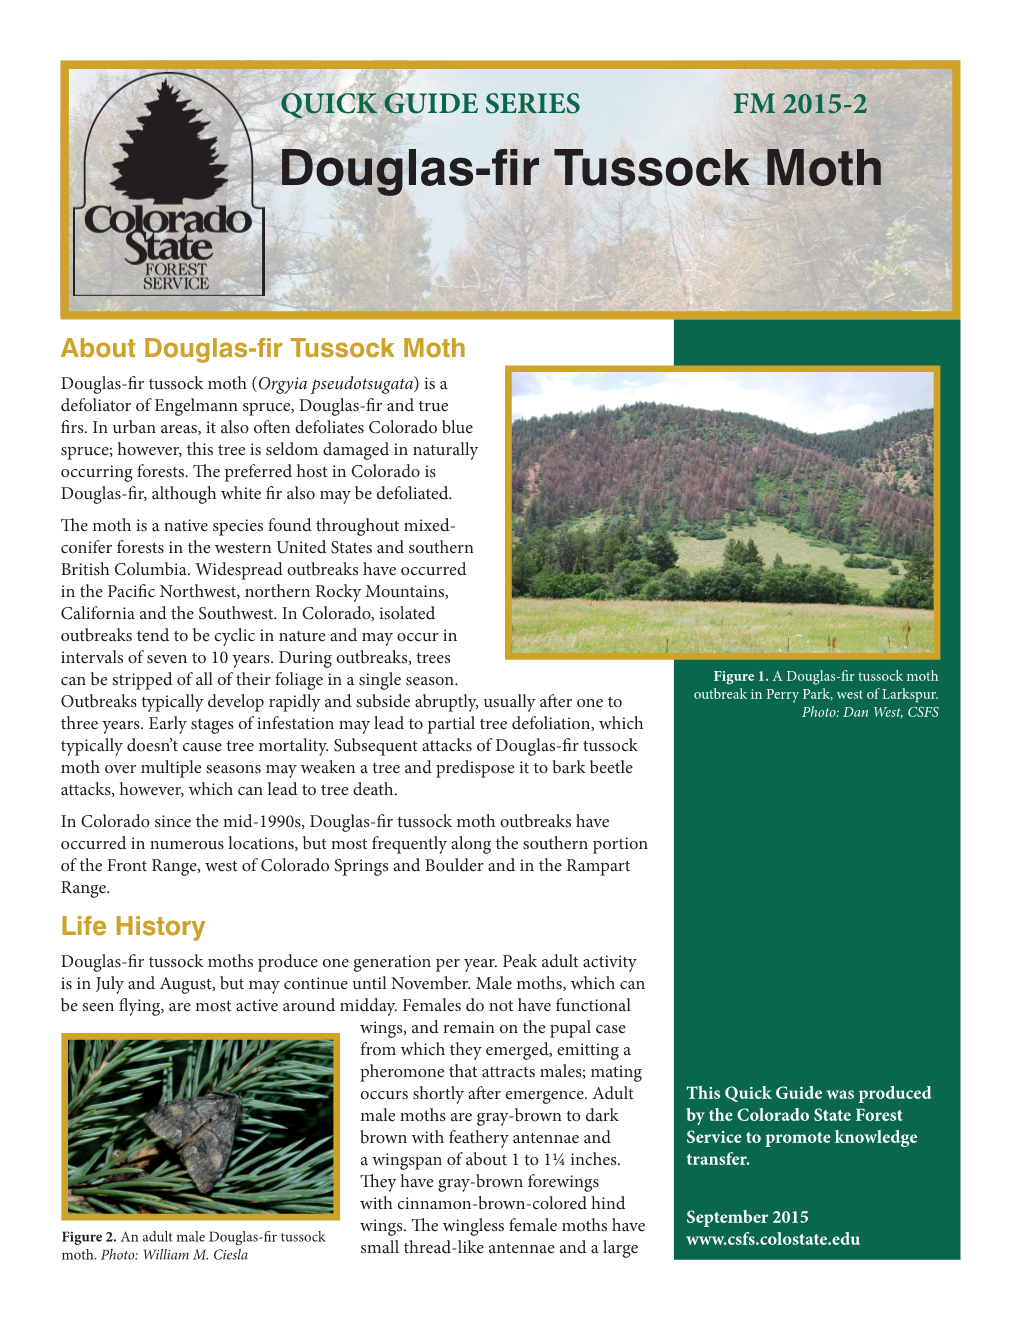 Douglas-Fir Tussock Moth